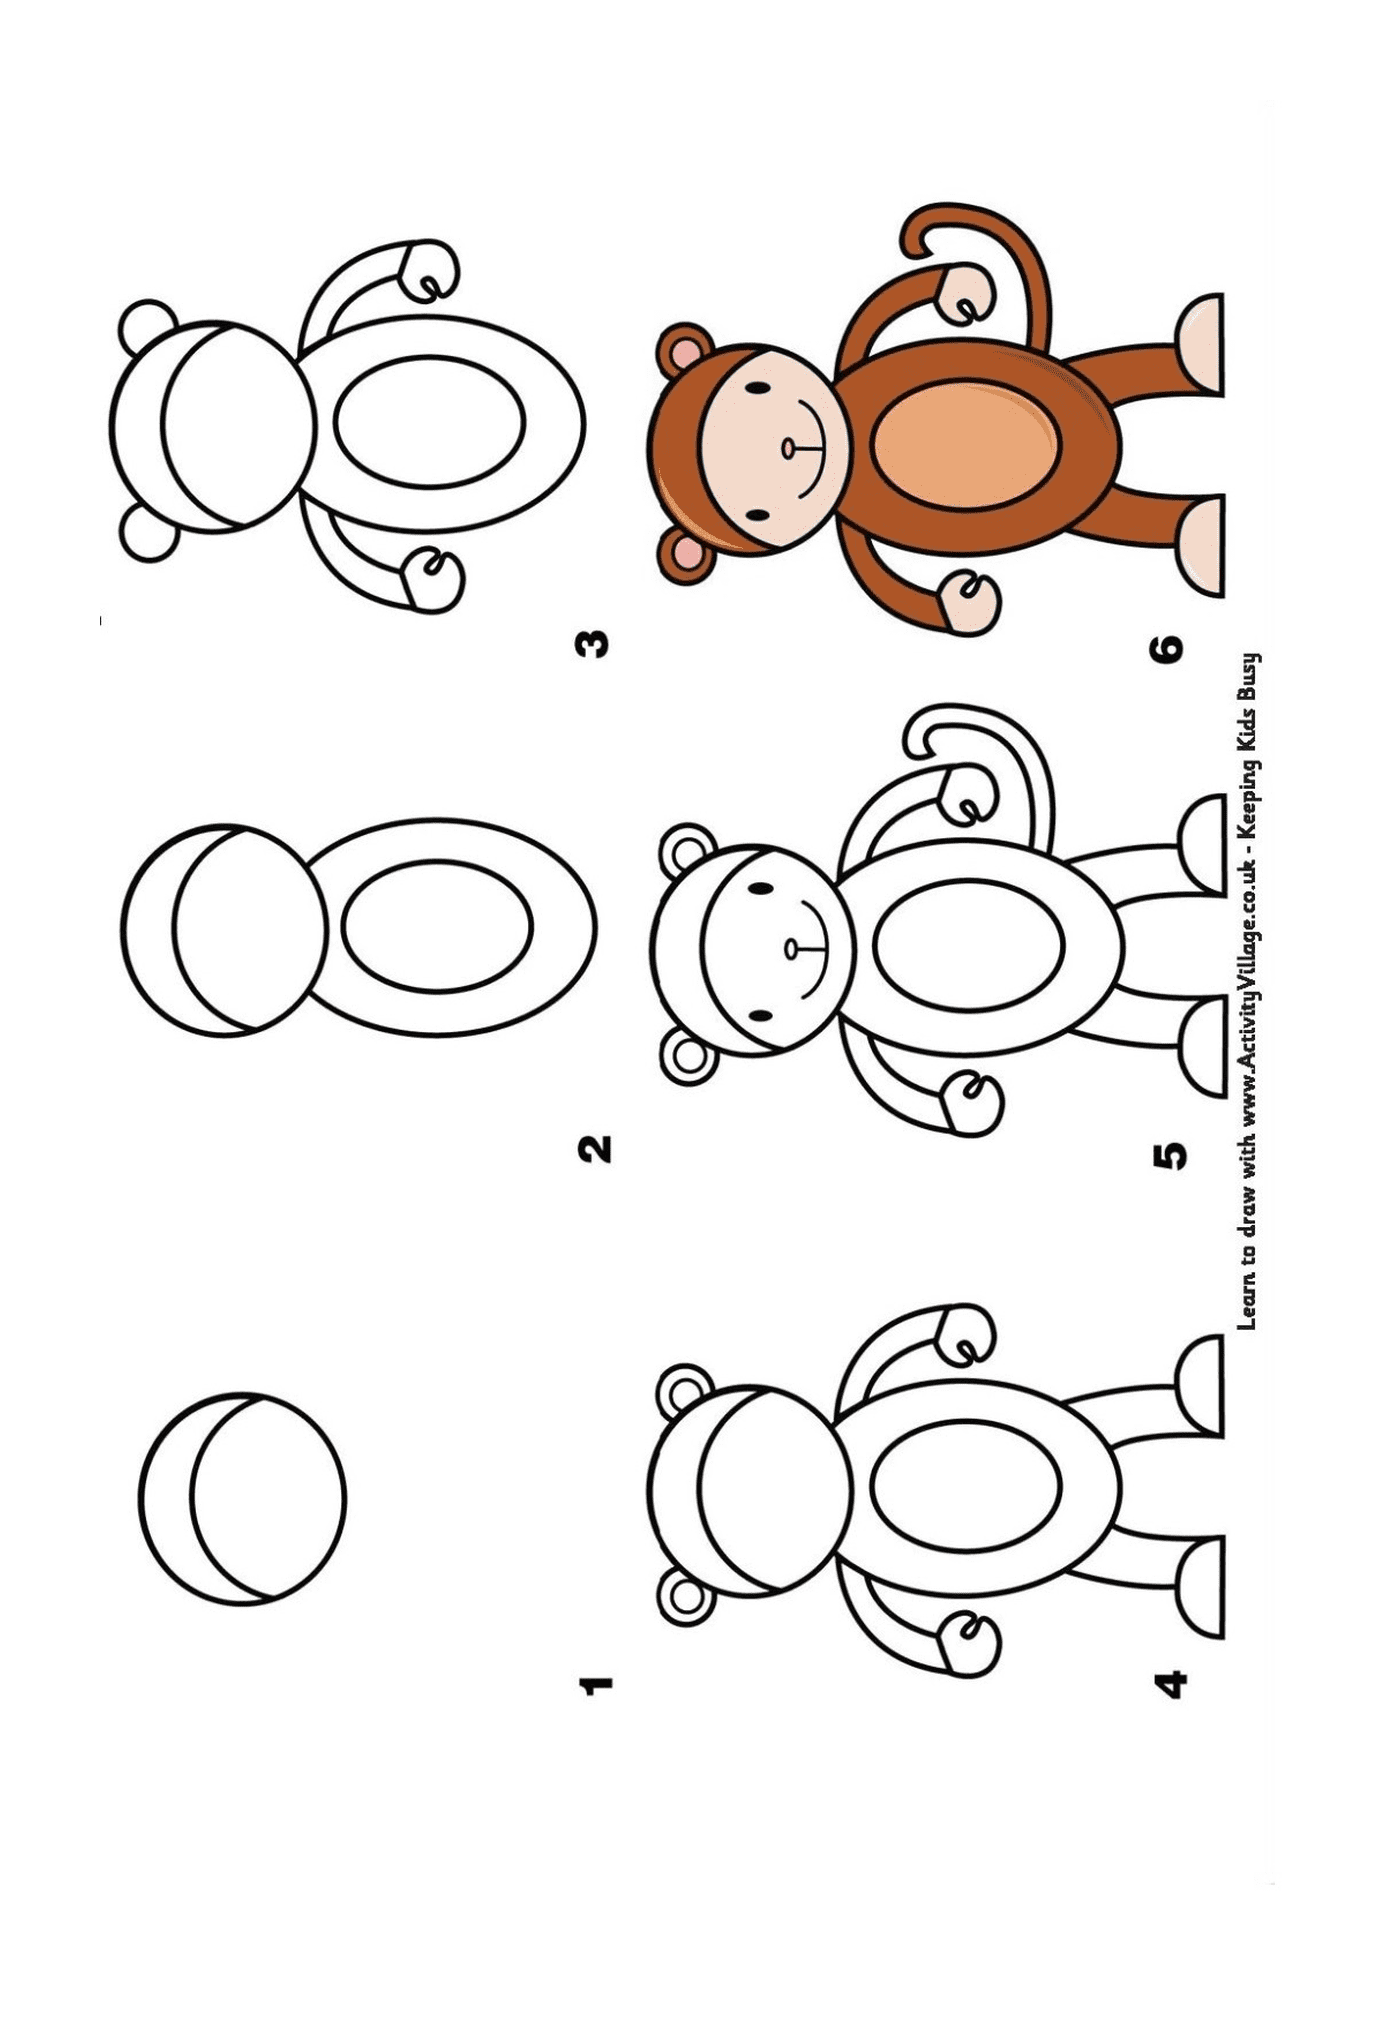  Cómo dibujar un mono paso a paso 